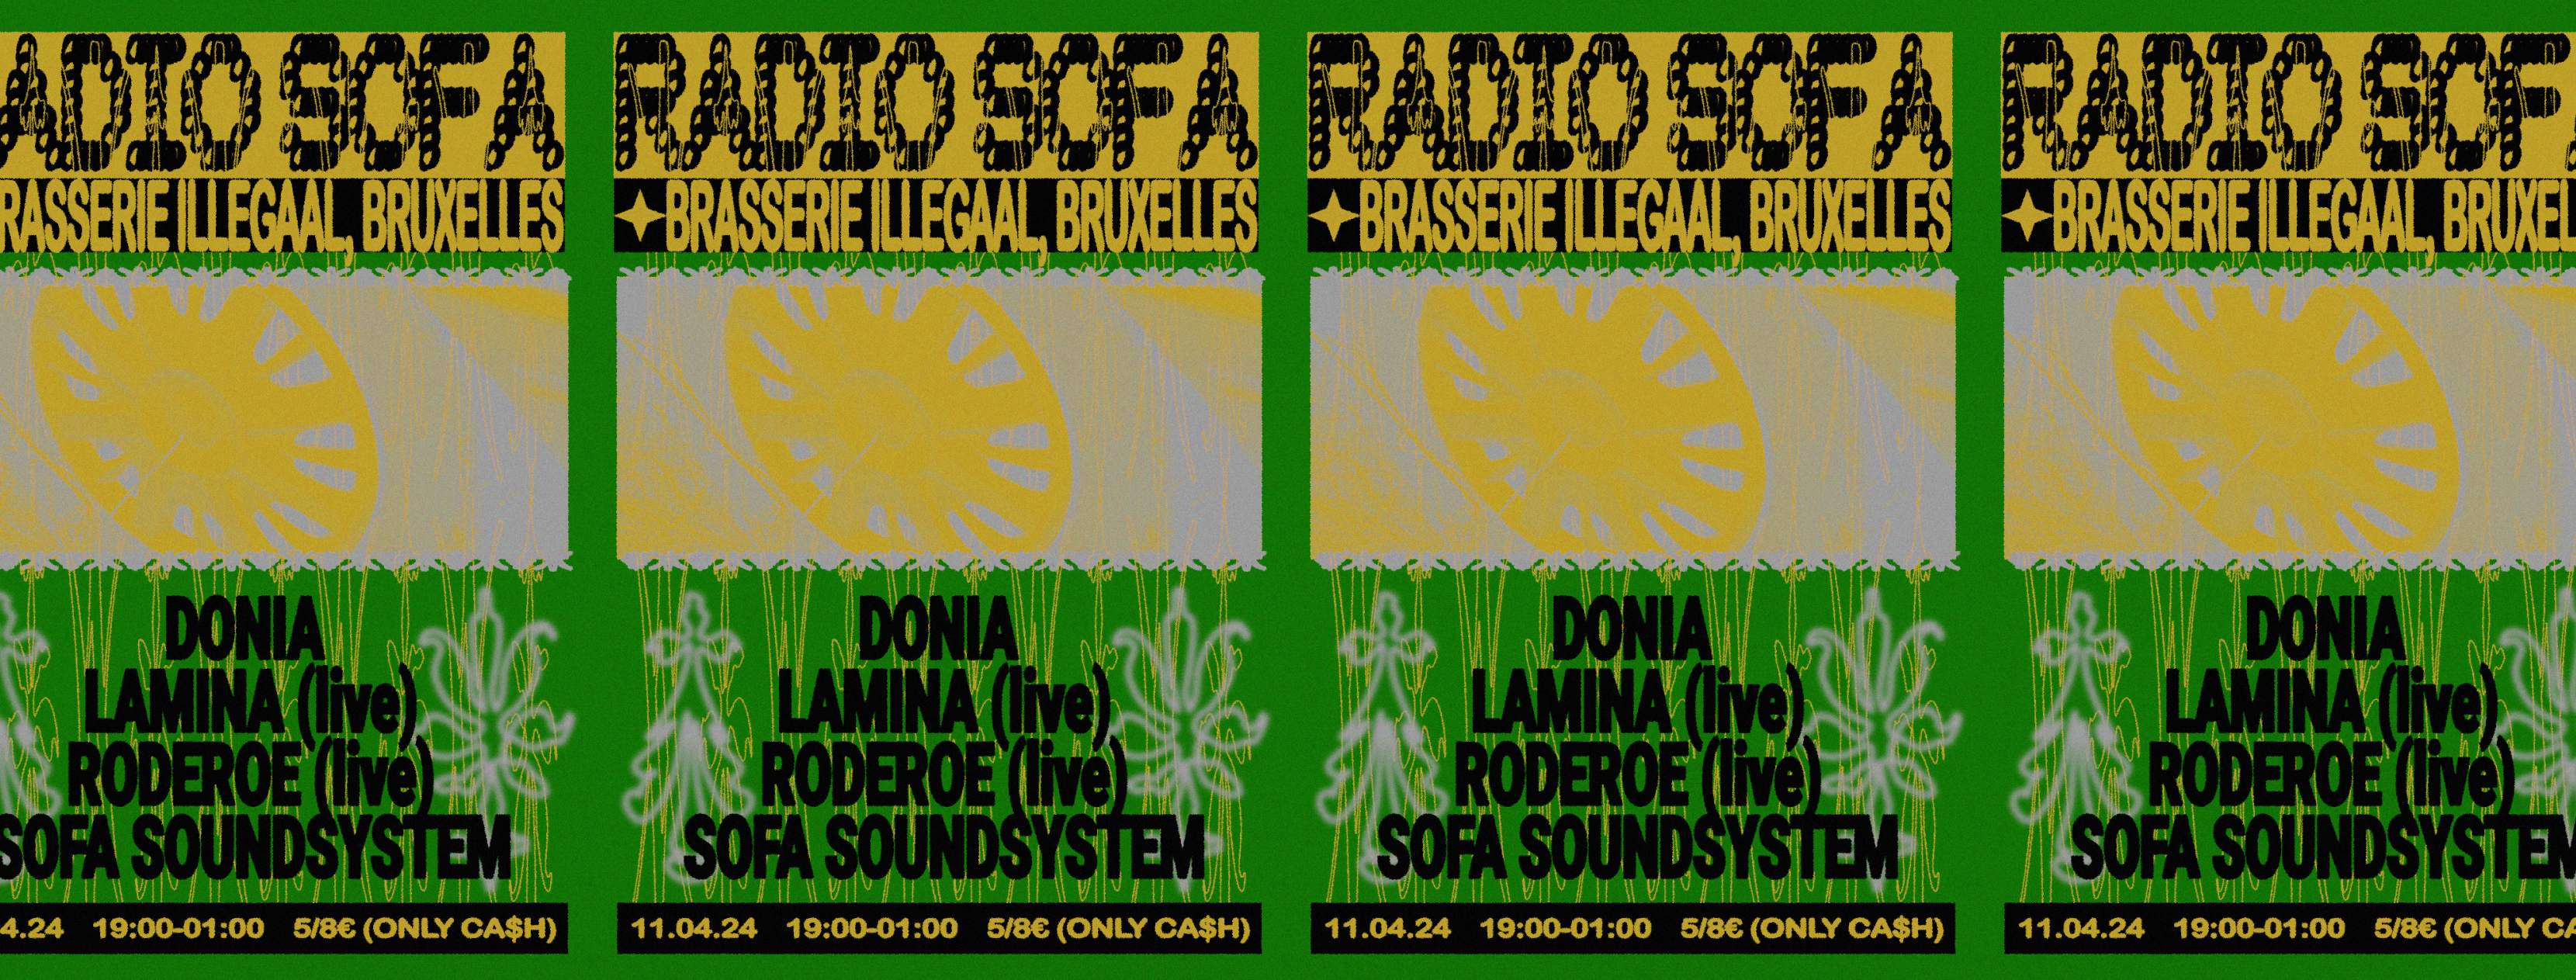 Radio Sofa x Brasserie Illegaal: DONIA, LAMINA (live), Roderoe (live), SOFA SOUNDSYSTEM - Página frontal